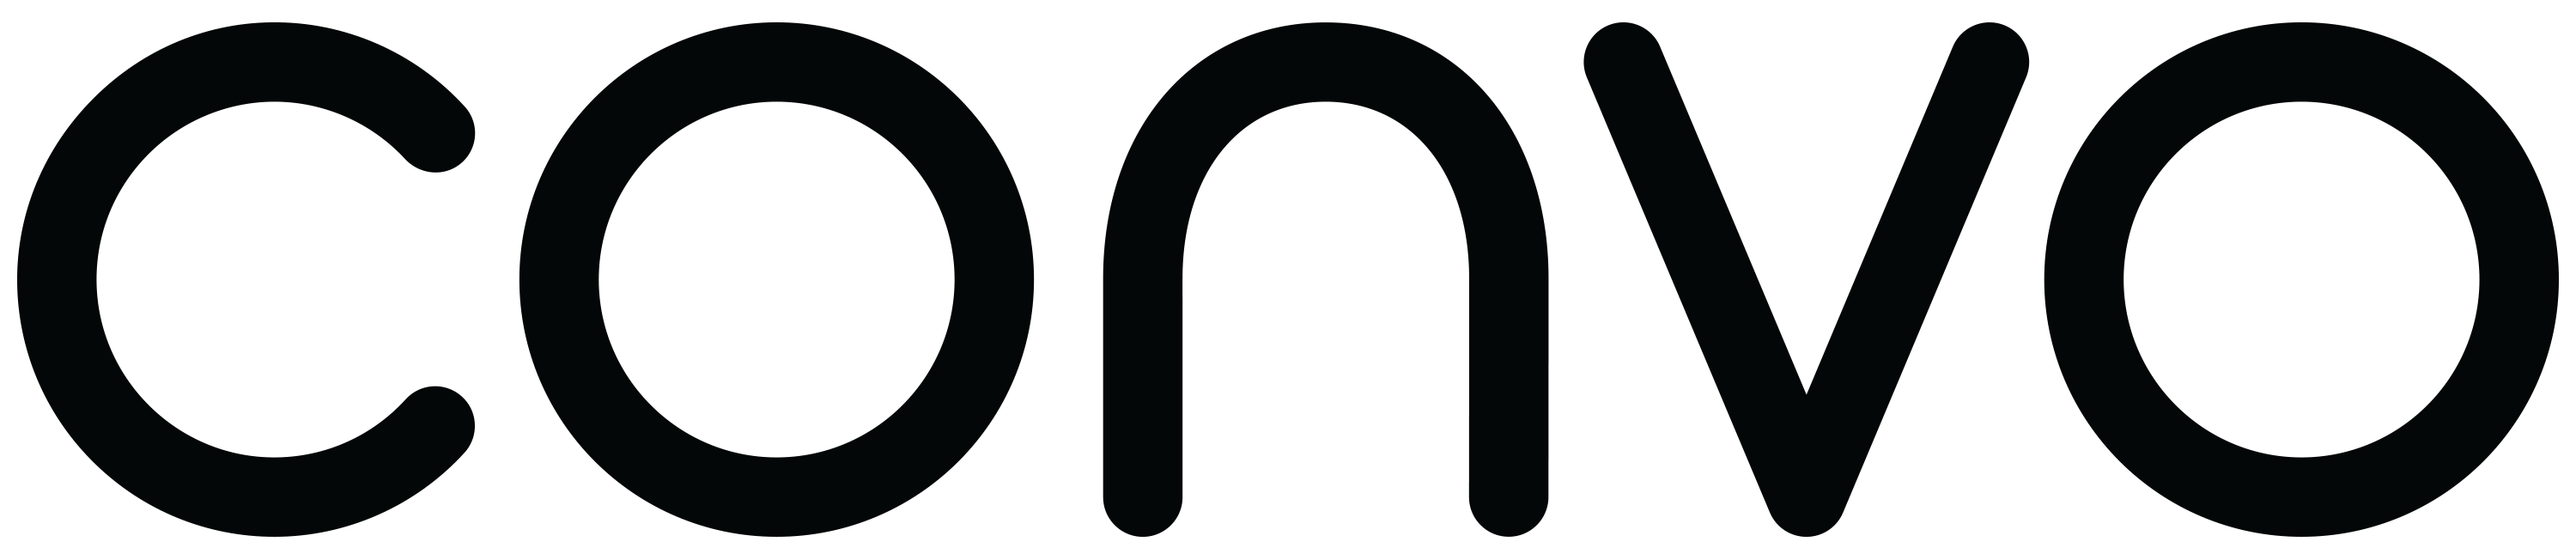 Convo Communications Logo